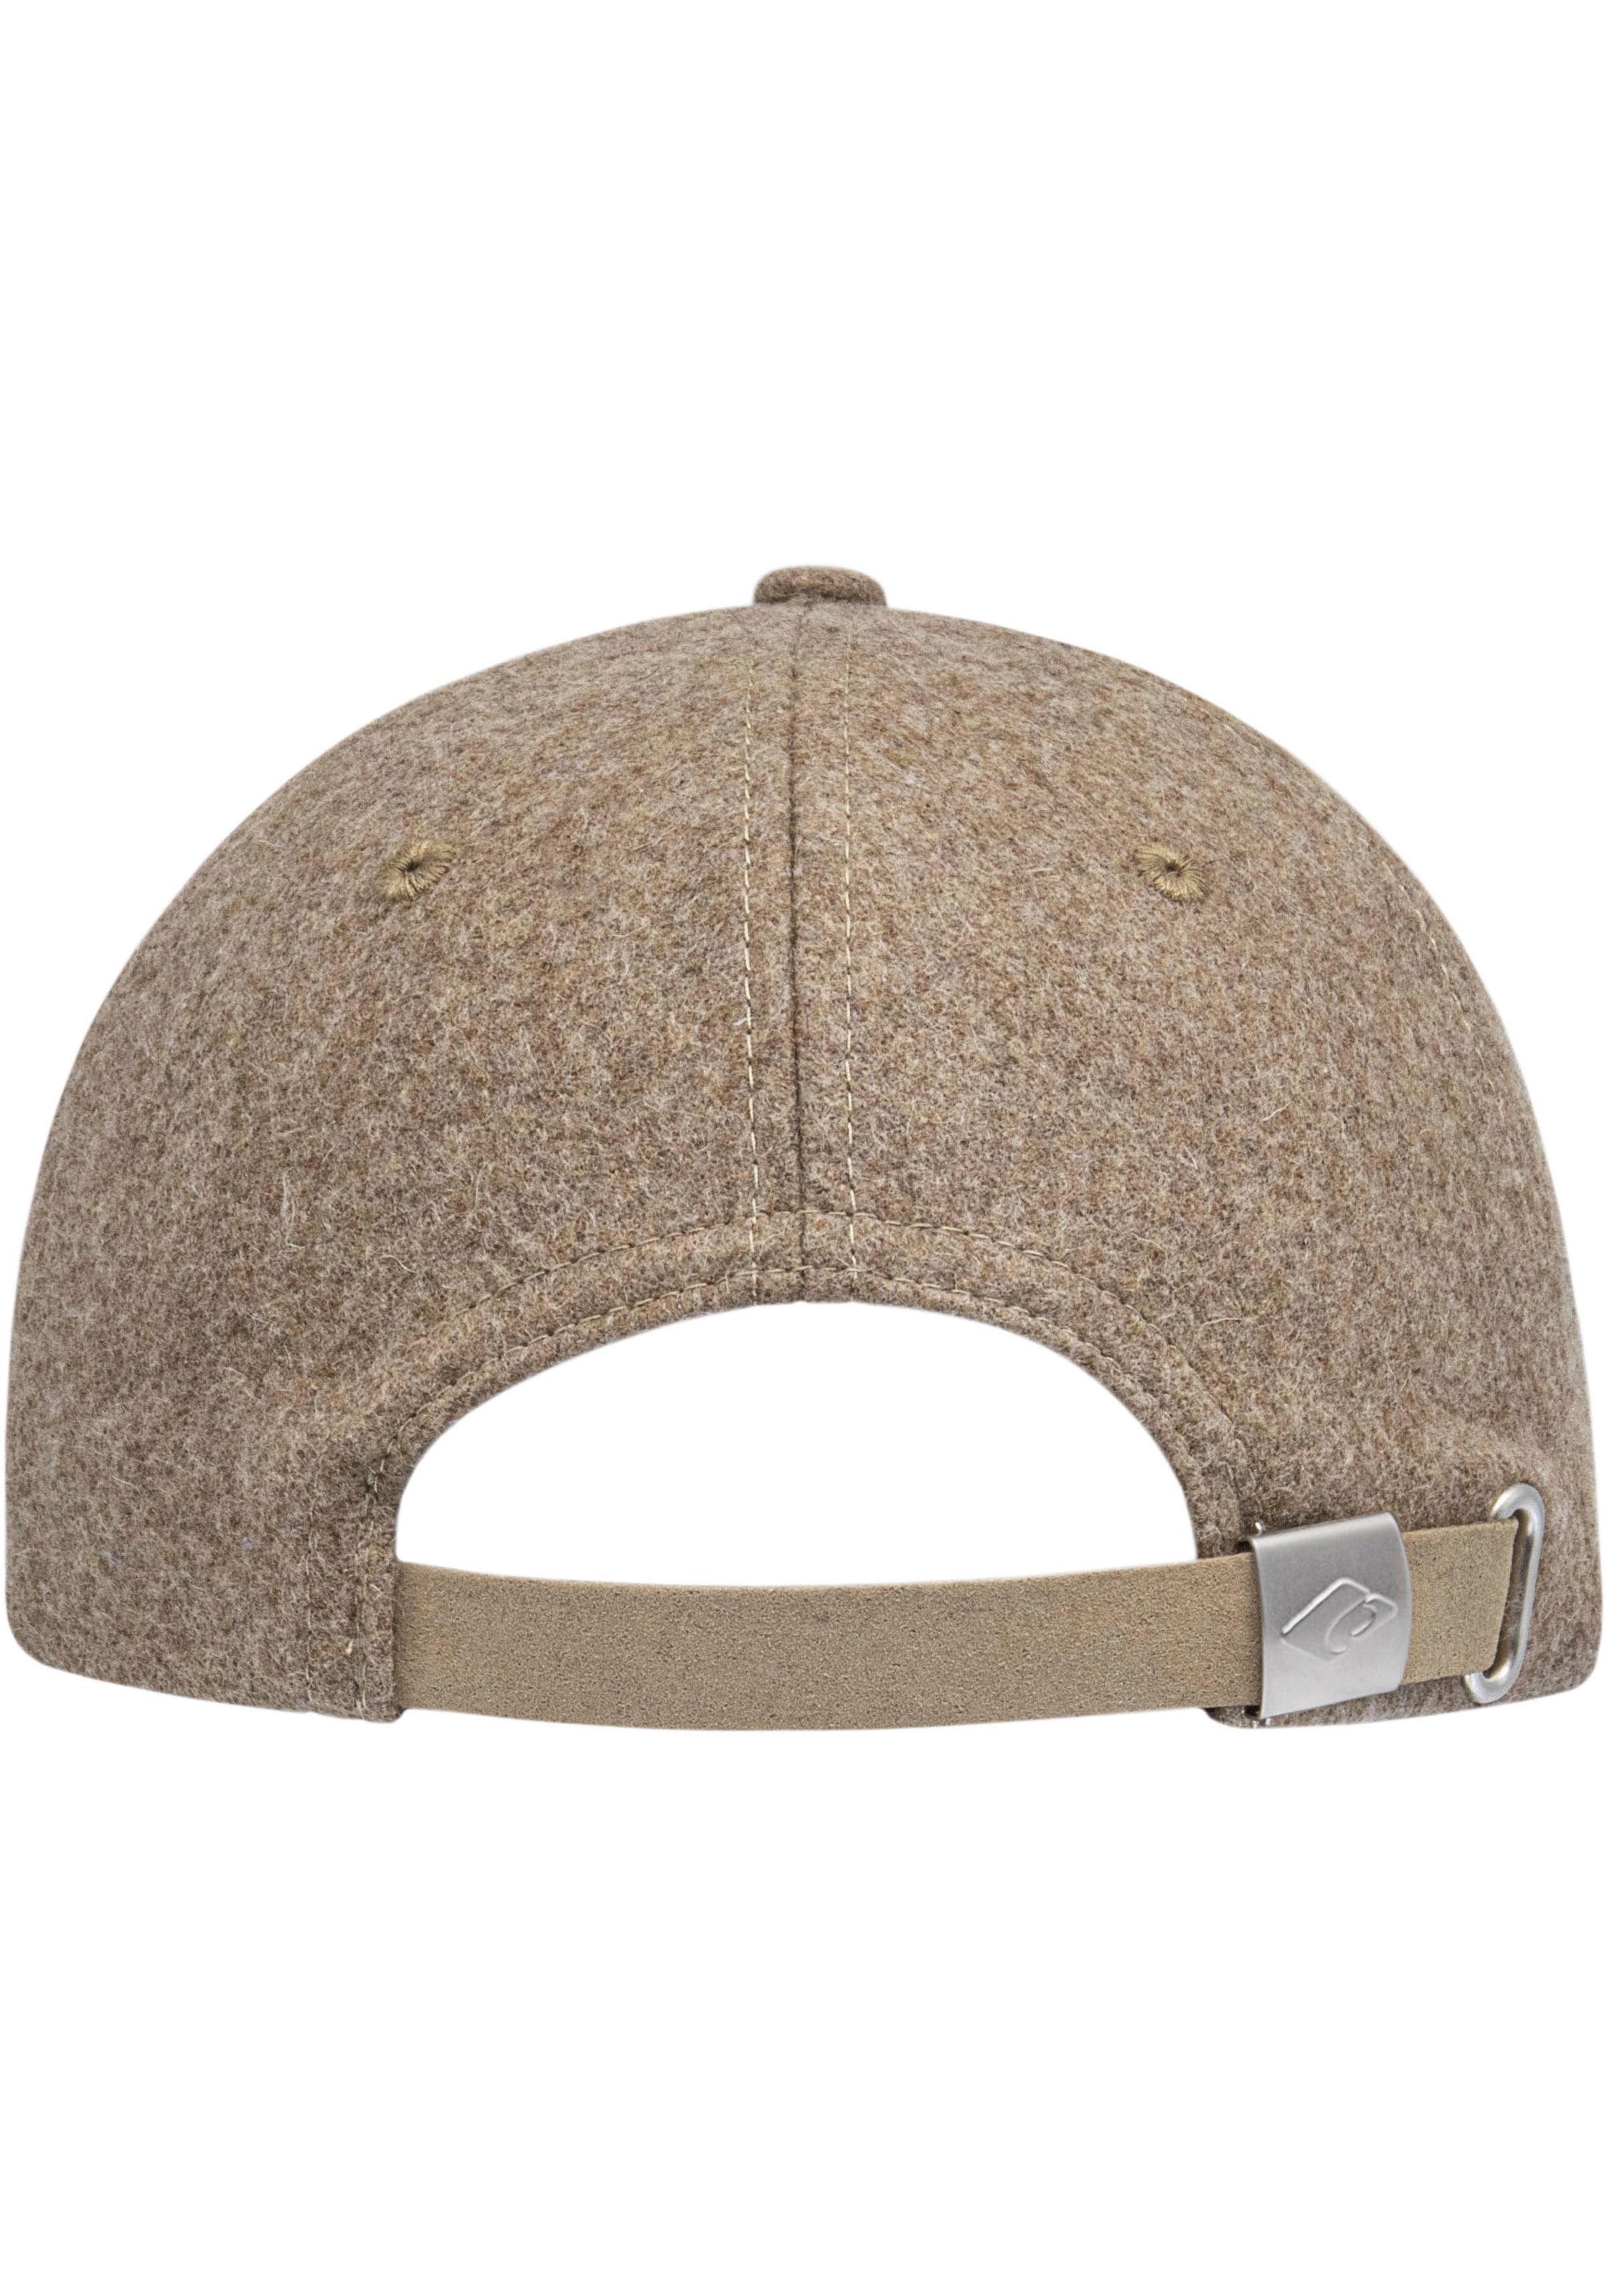 chillouts Baseball Cap »Mateo Hat«, Wasserabweisendes Material